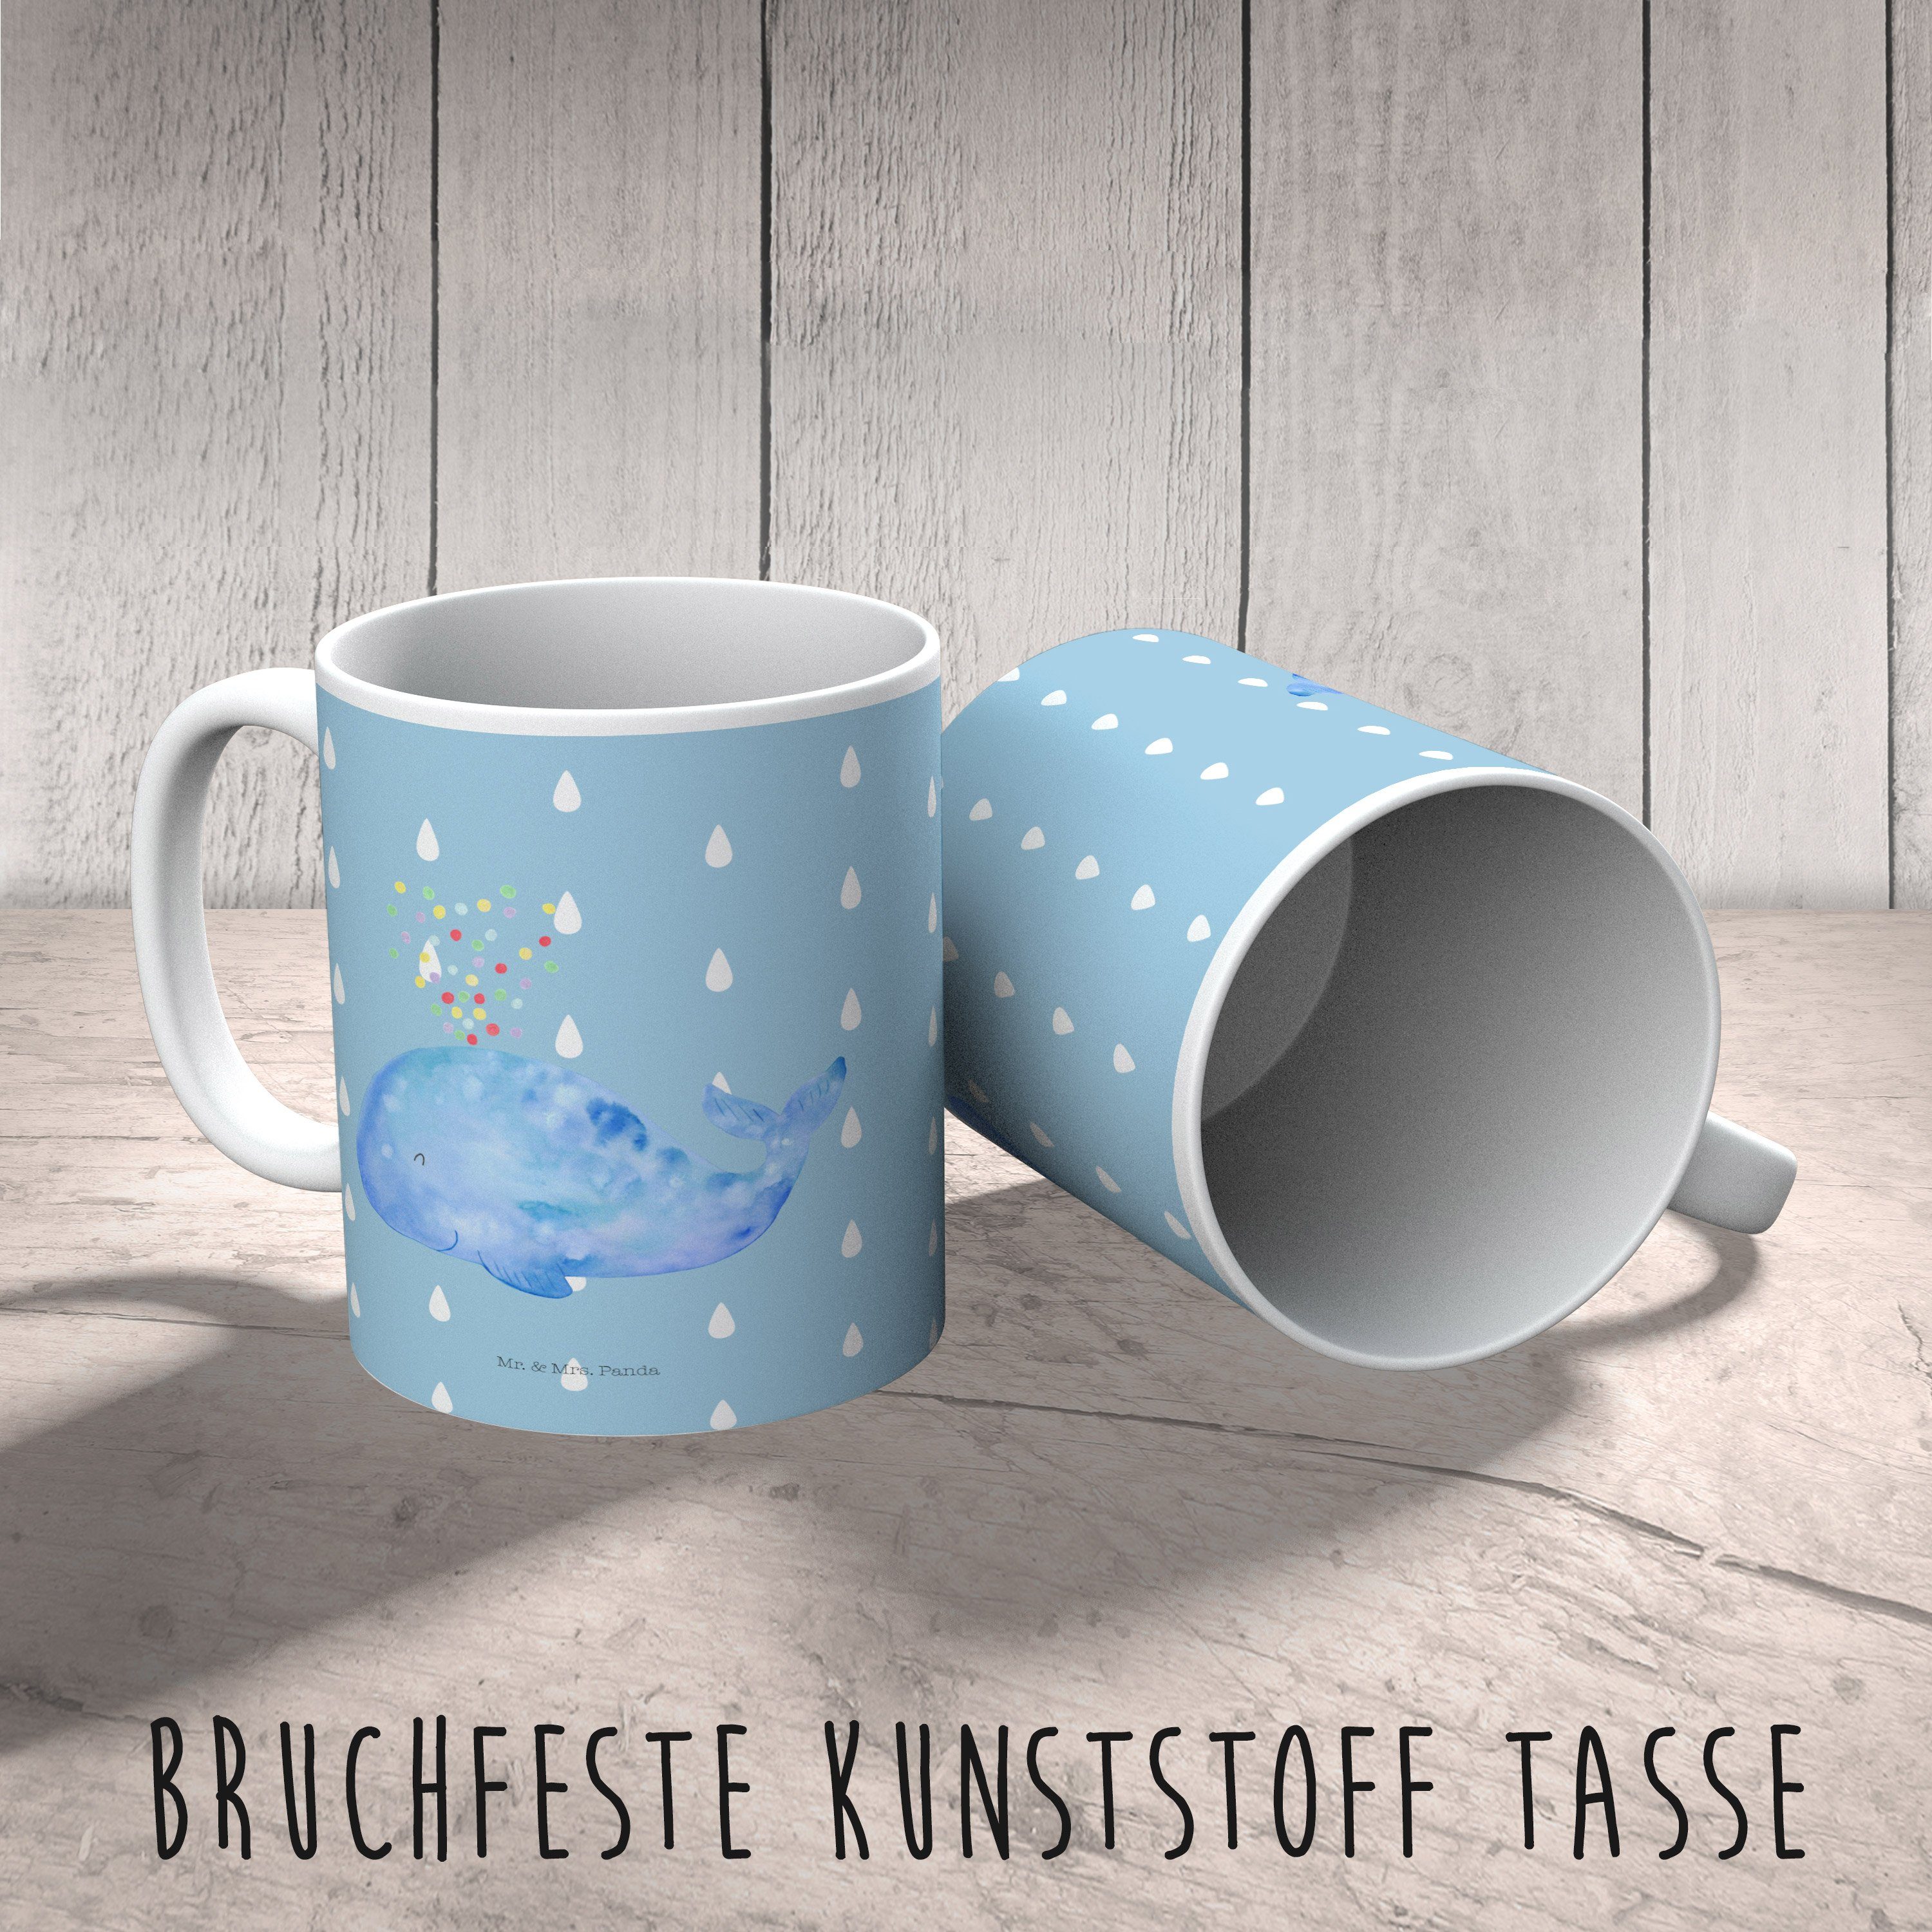 Pastell Kinderbecher Kaffeetasse, Blau Kunststoff & Meer, Mrs. Trennung, Panda - Mr. Konfetti - Wal Geschenk,